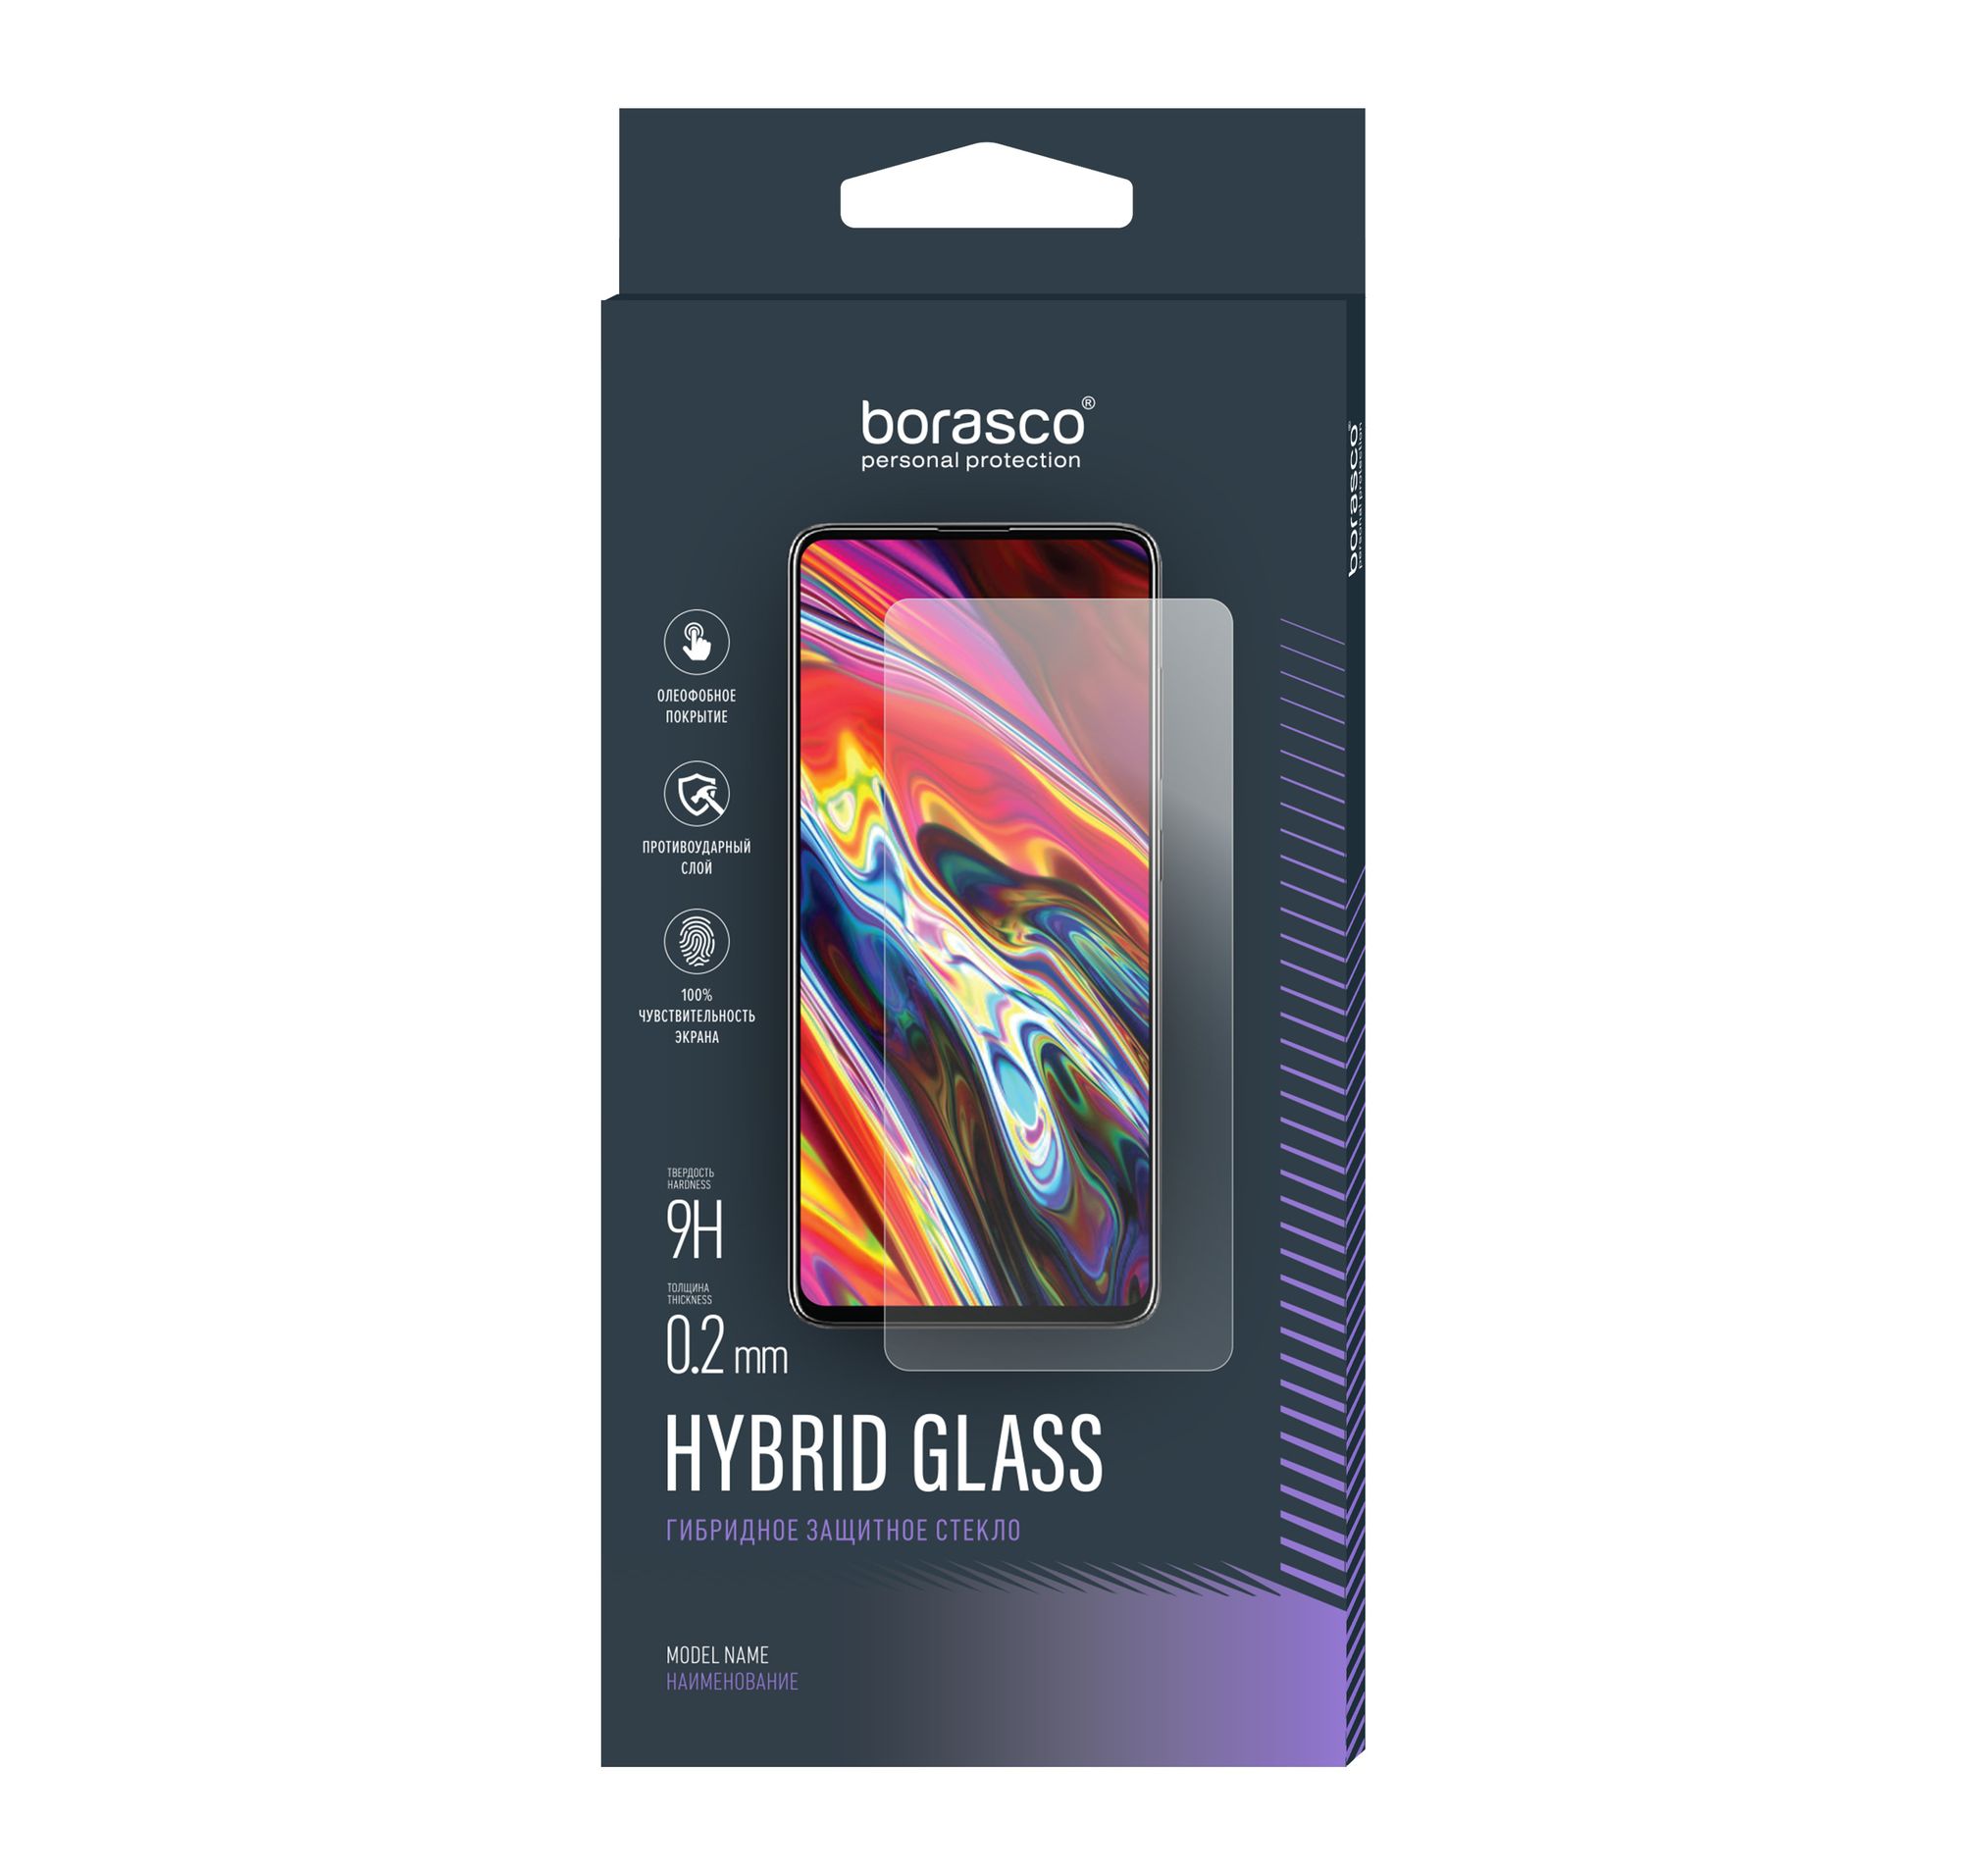 Стекло защитное Hybrid Glass VSP 0,26 мм для Samsung Galaxy A7 2018 антишпионское защитное стекло для galaxy a6 a8 plus 2018 a7 a9 2018 9h закаленное стекло для samsung a5 a7 2015 2016 2017